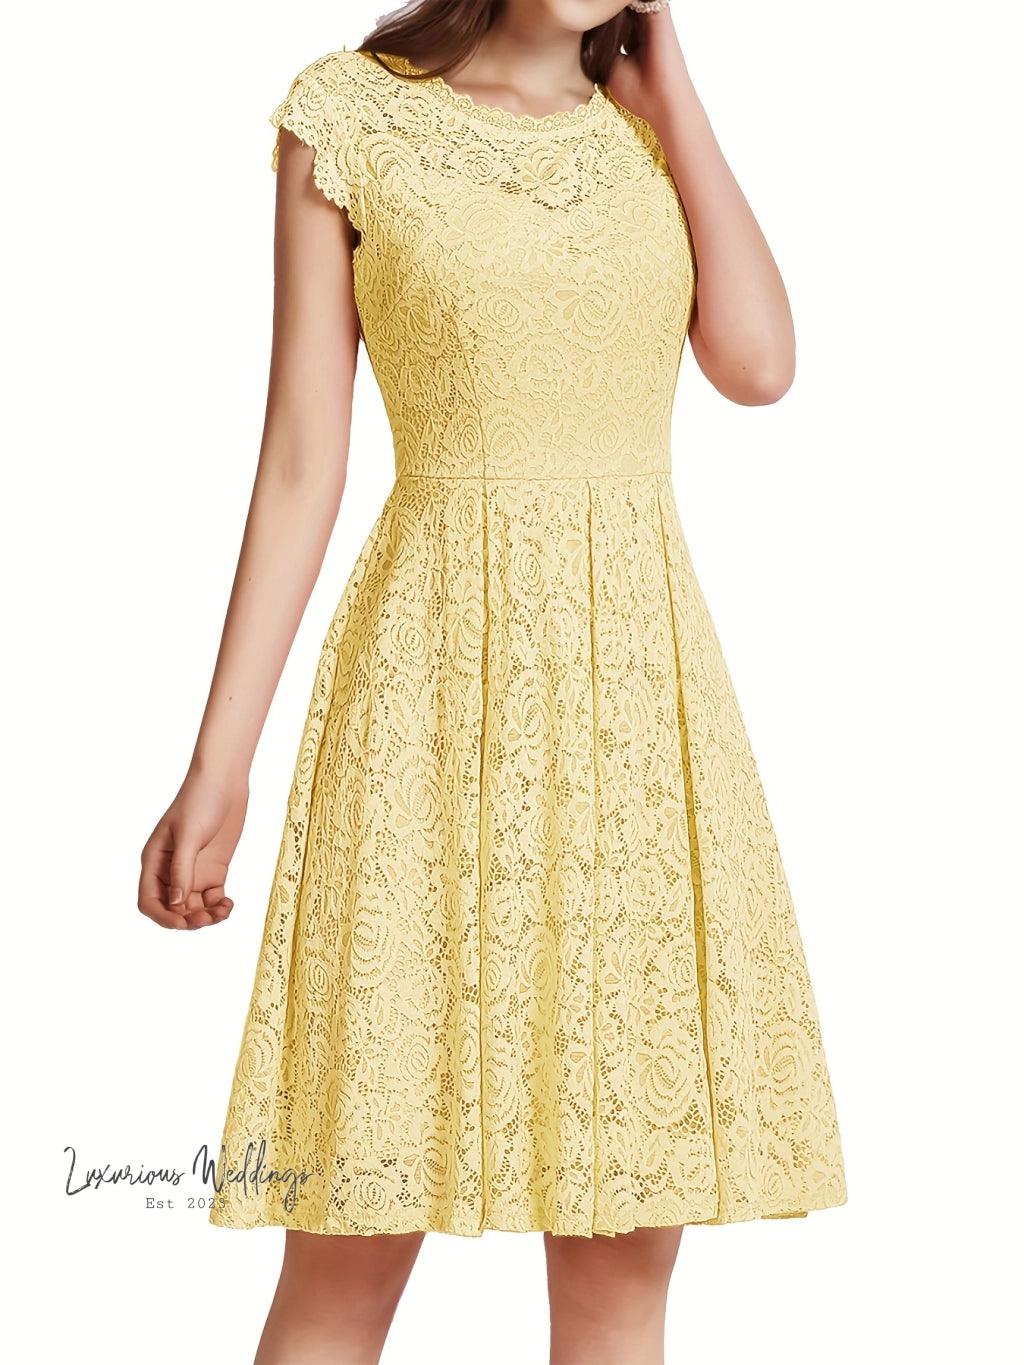 Chic Lace Sleeveless Dress - Spring/Summer/Fall - Luxurious Weddings - Luxurious Weddings